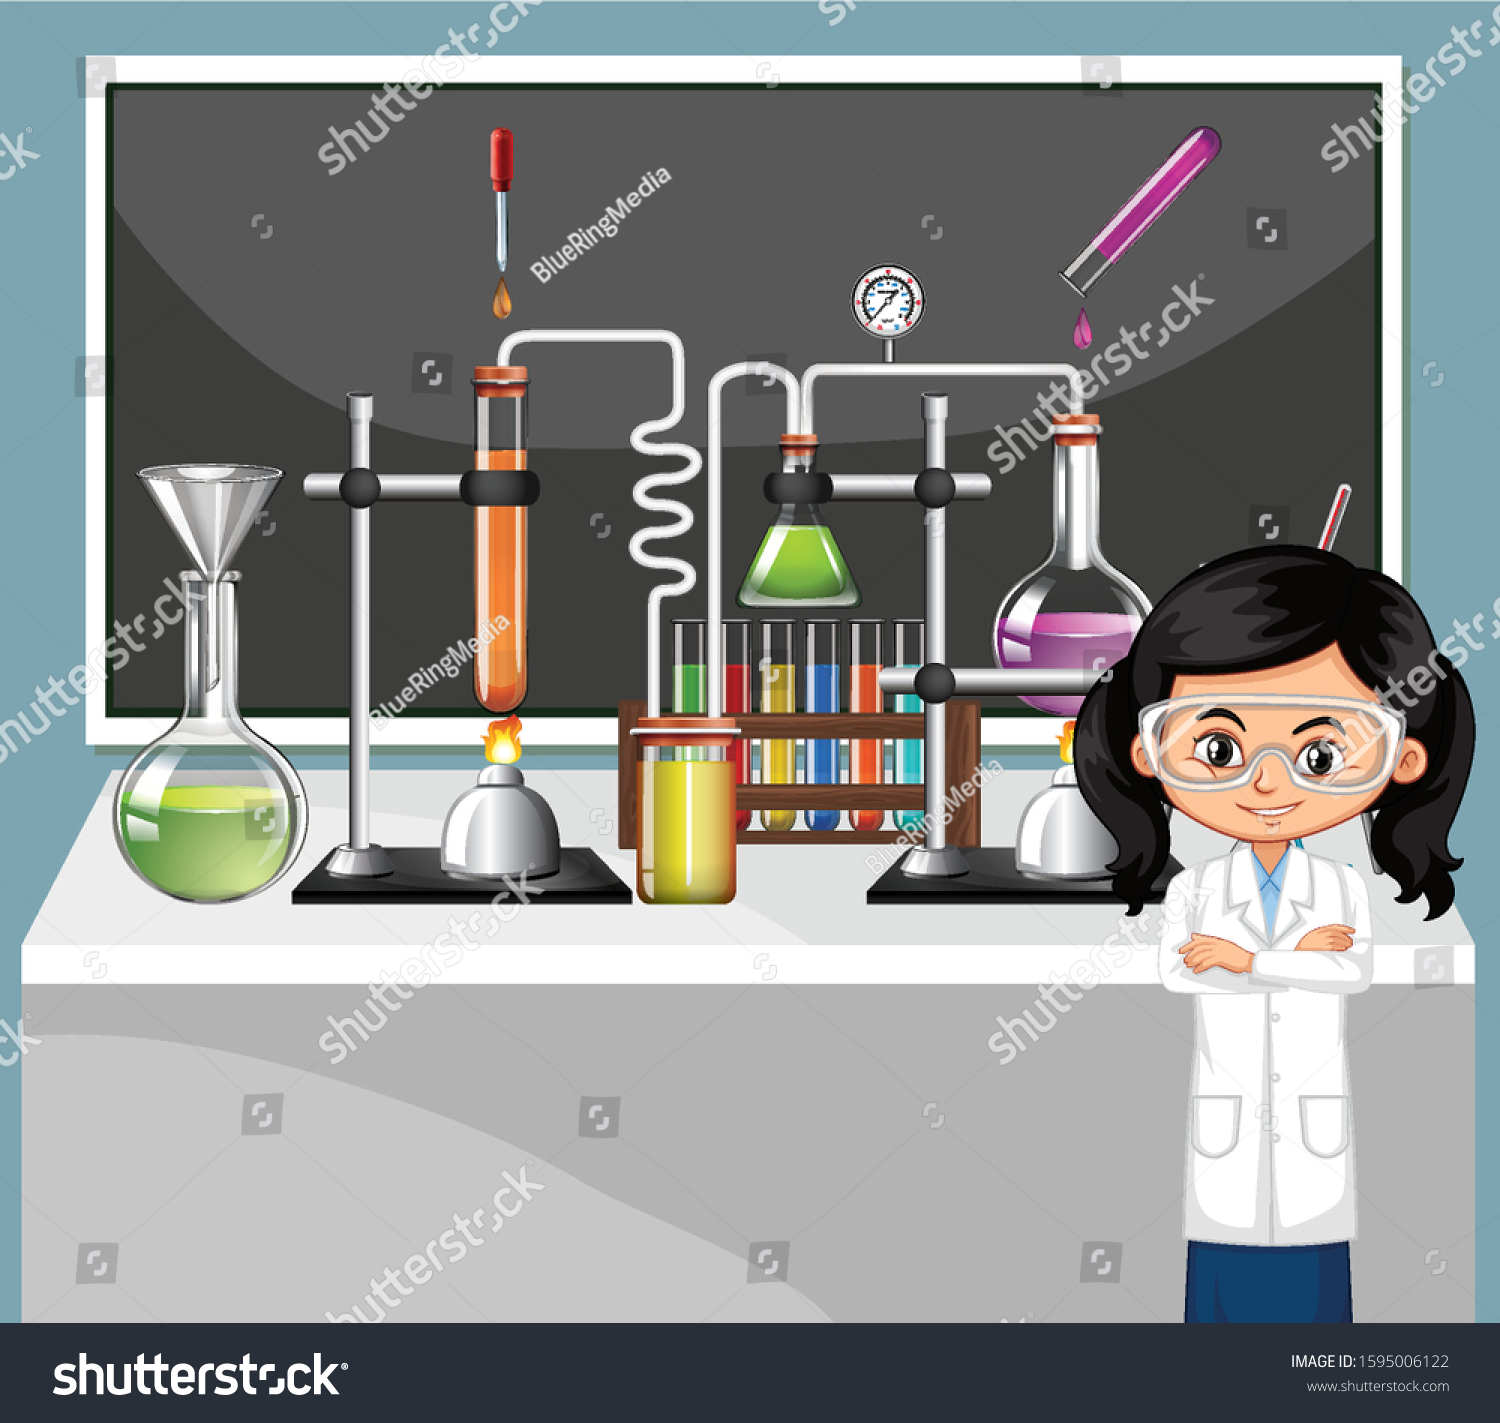 1,268 Little girl scientist Stock Illustrations, Images & Vectors ...